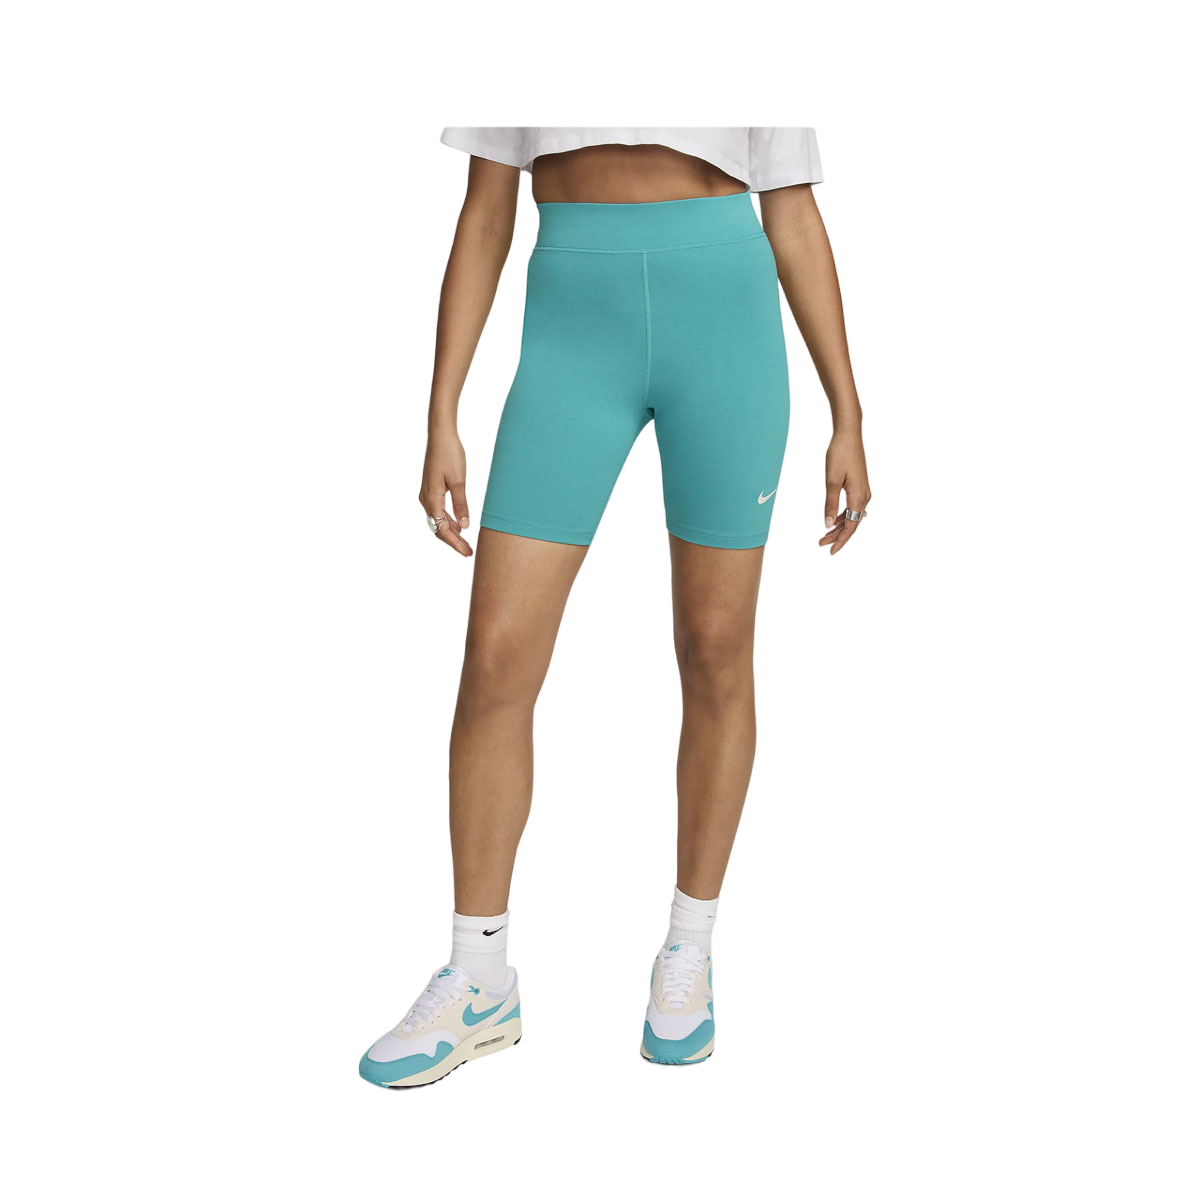 Nike High-Waisted 8" Biker Shorts Women's